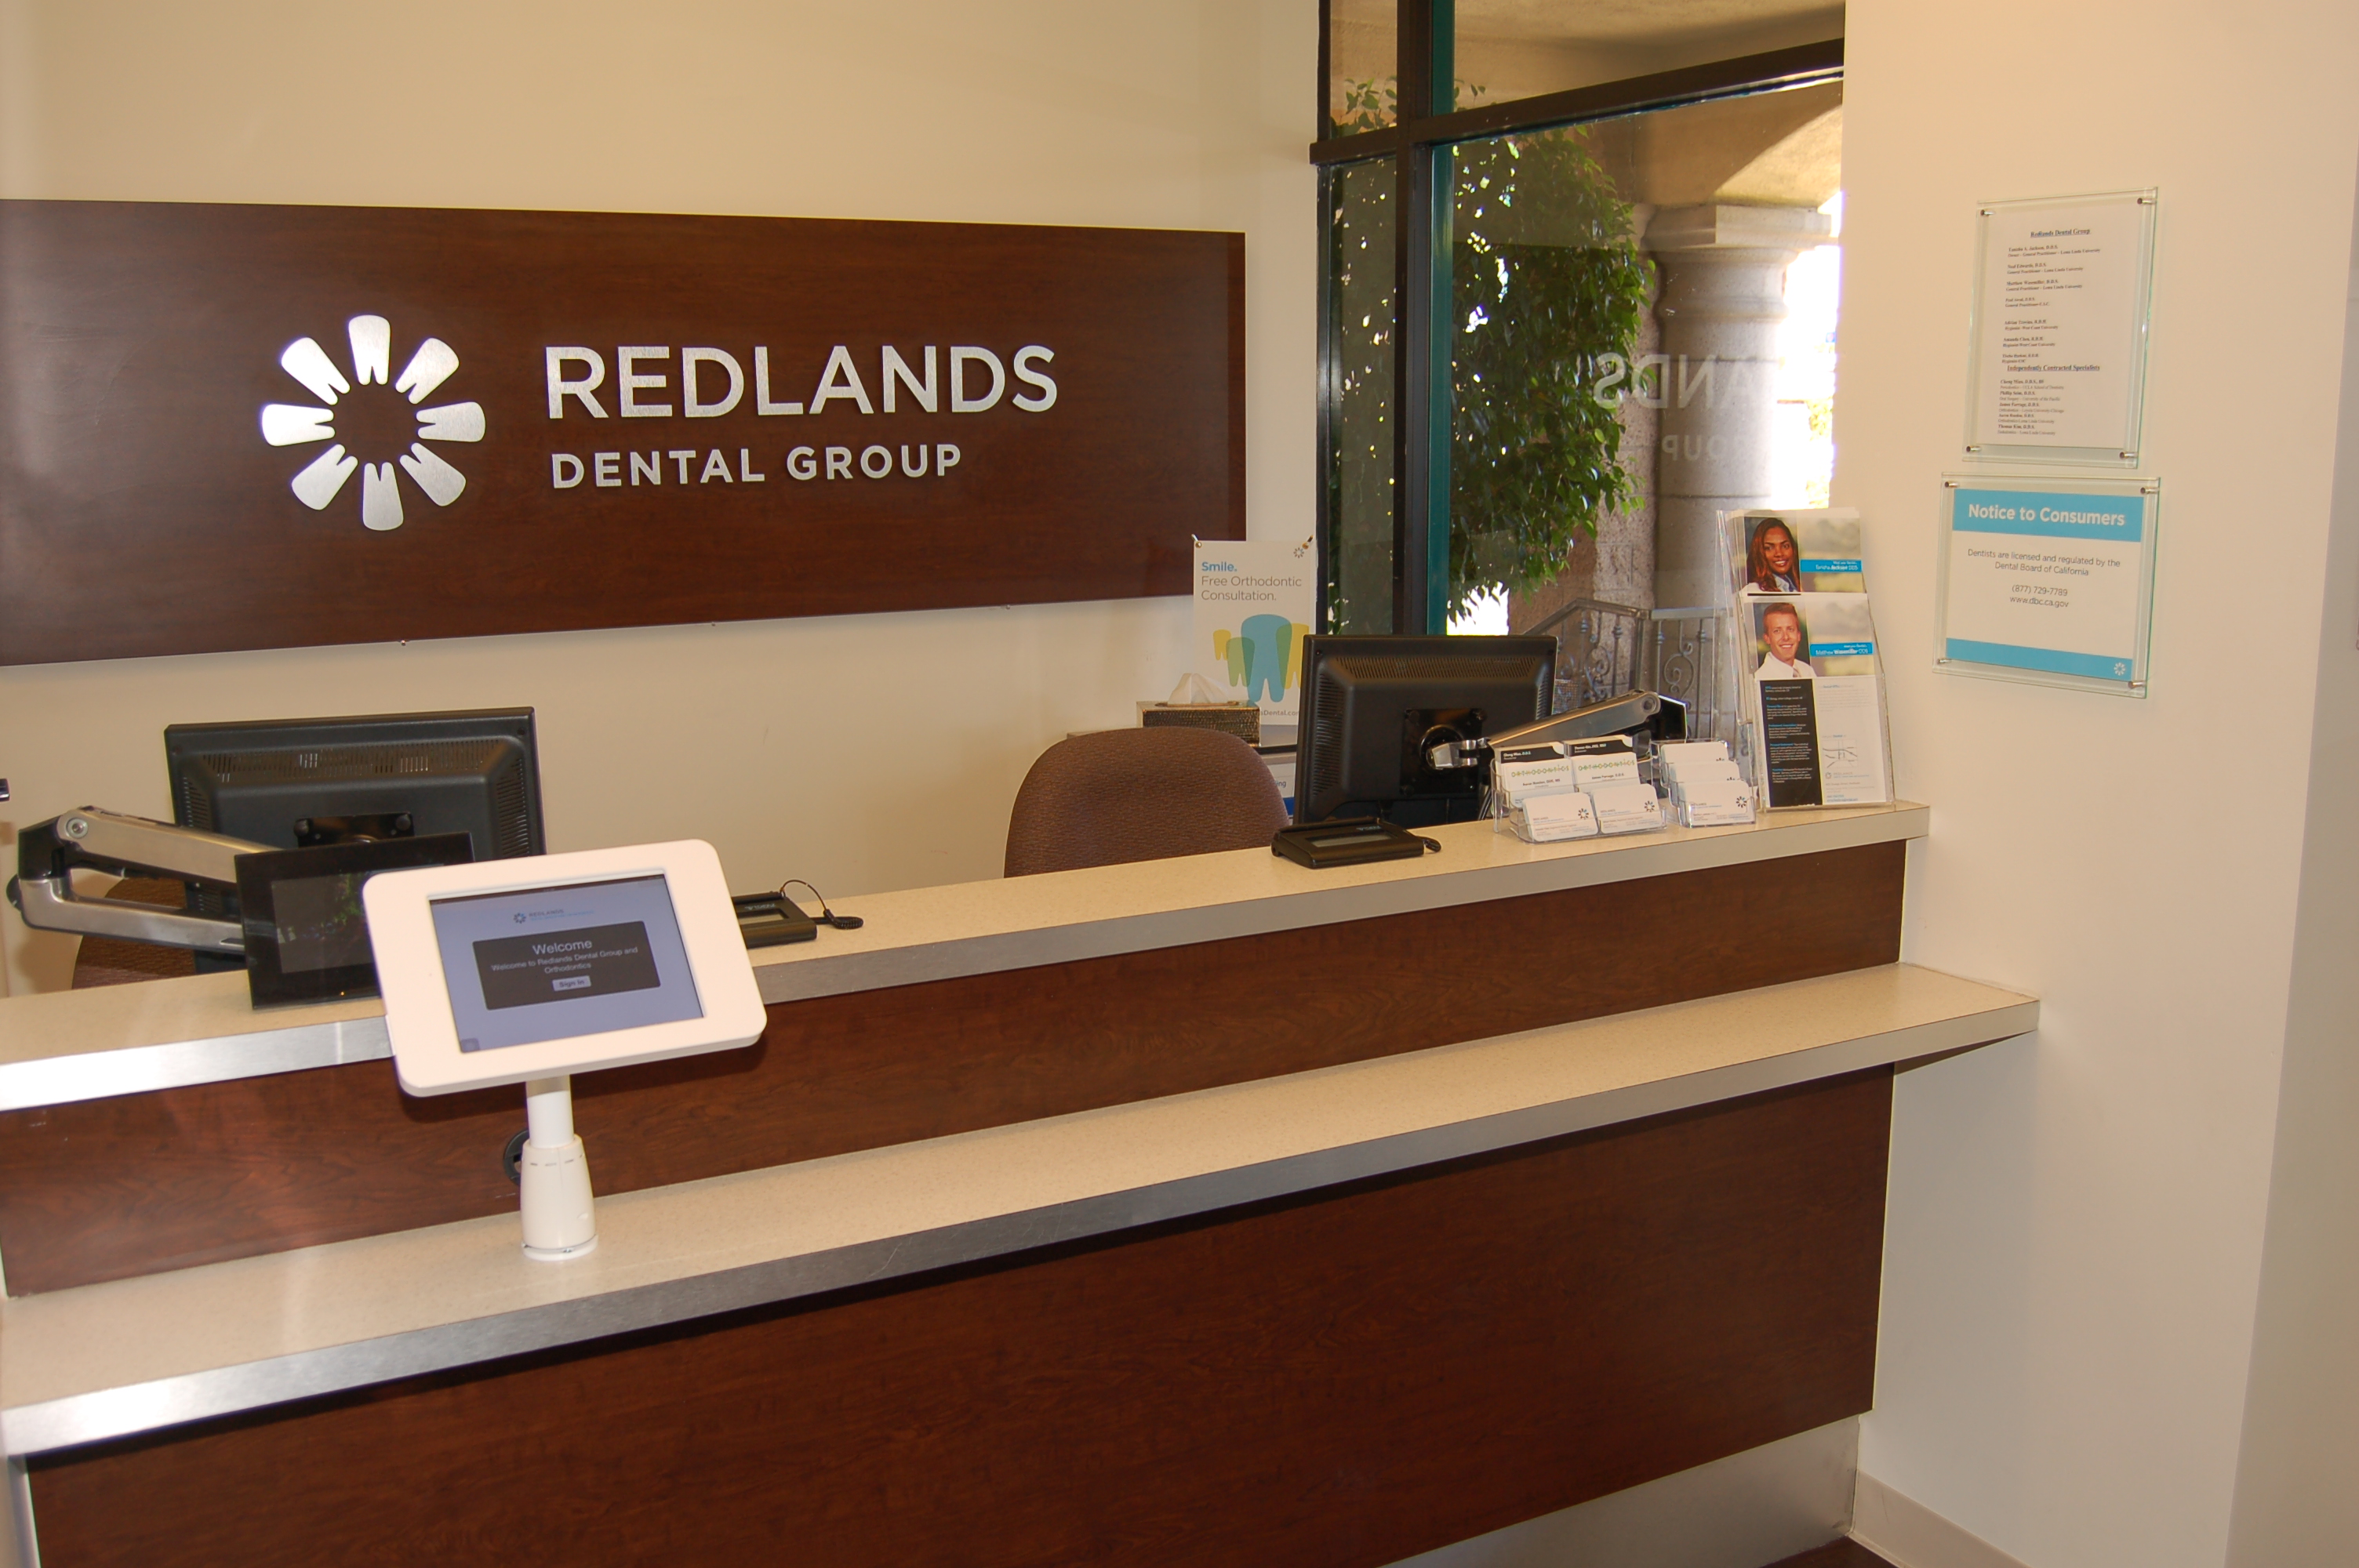 Redlands Dental Group and Orthodontics Photo